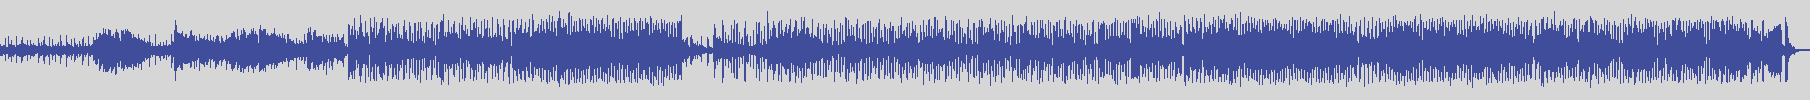 digiphonic_records [DPR013] Little Tony - Lacrime [Original Mix] audio wave form